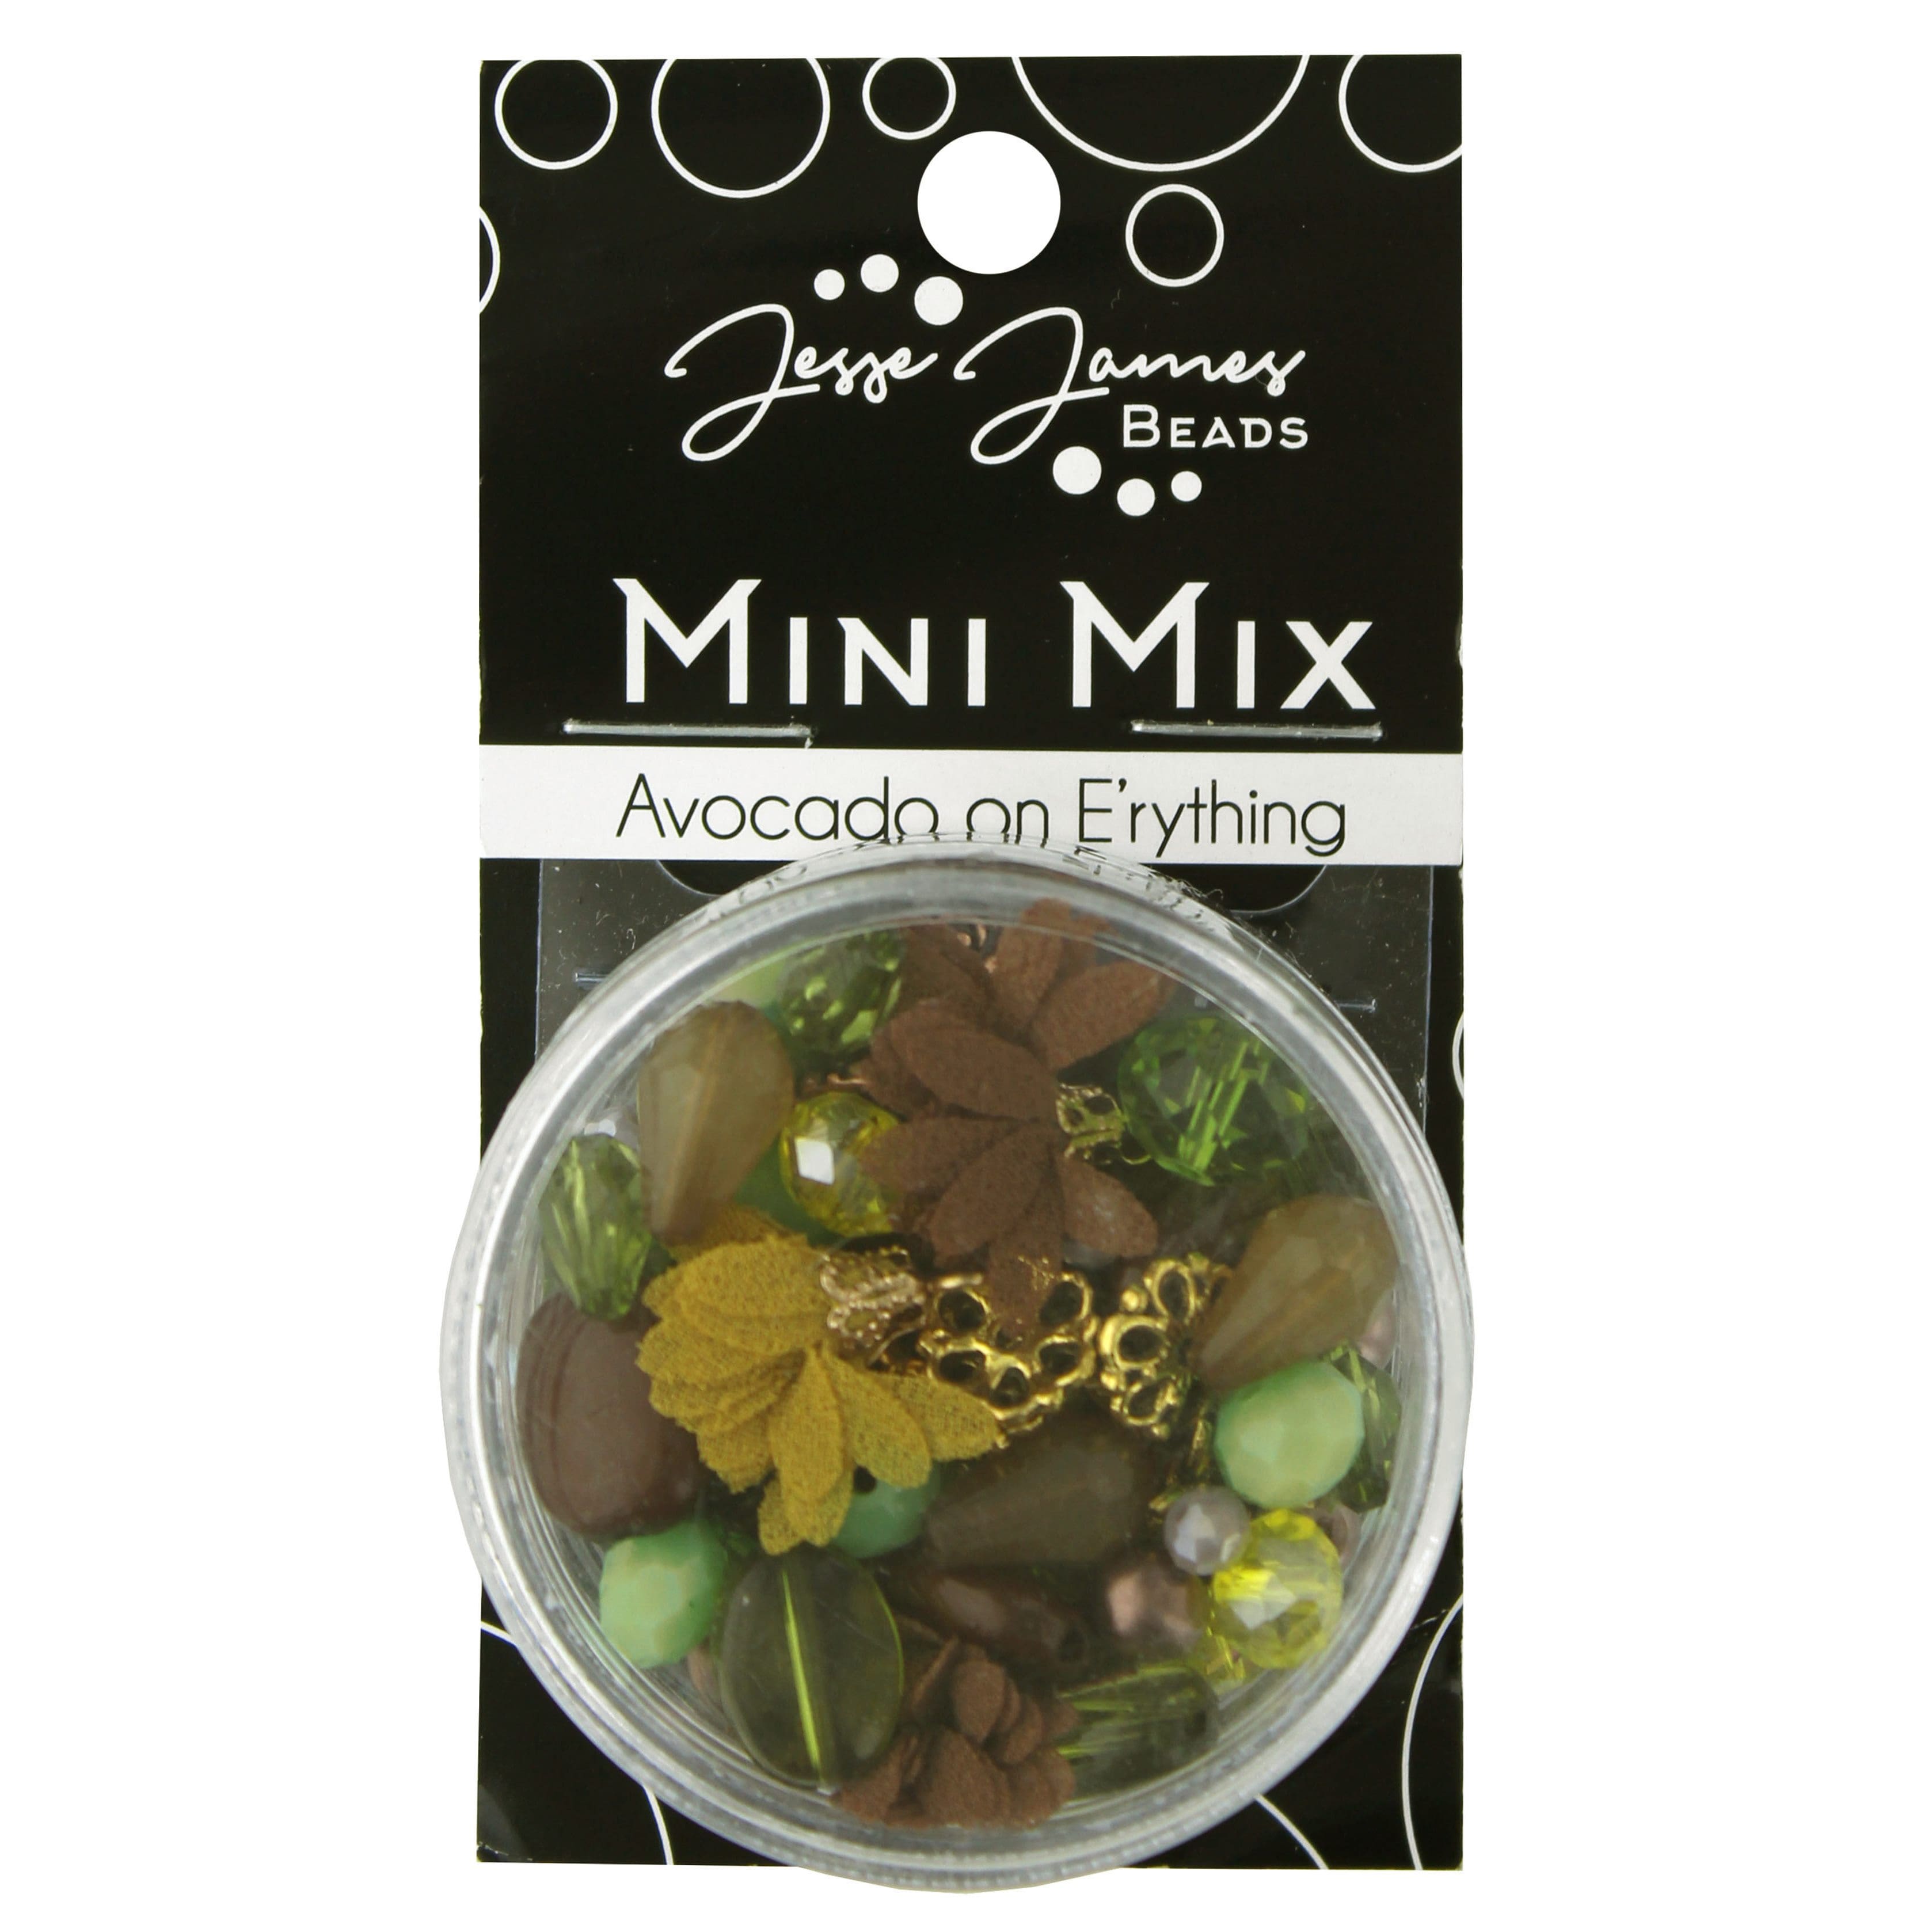 Jesse James Beads Market Fresh Mini Mix